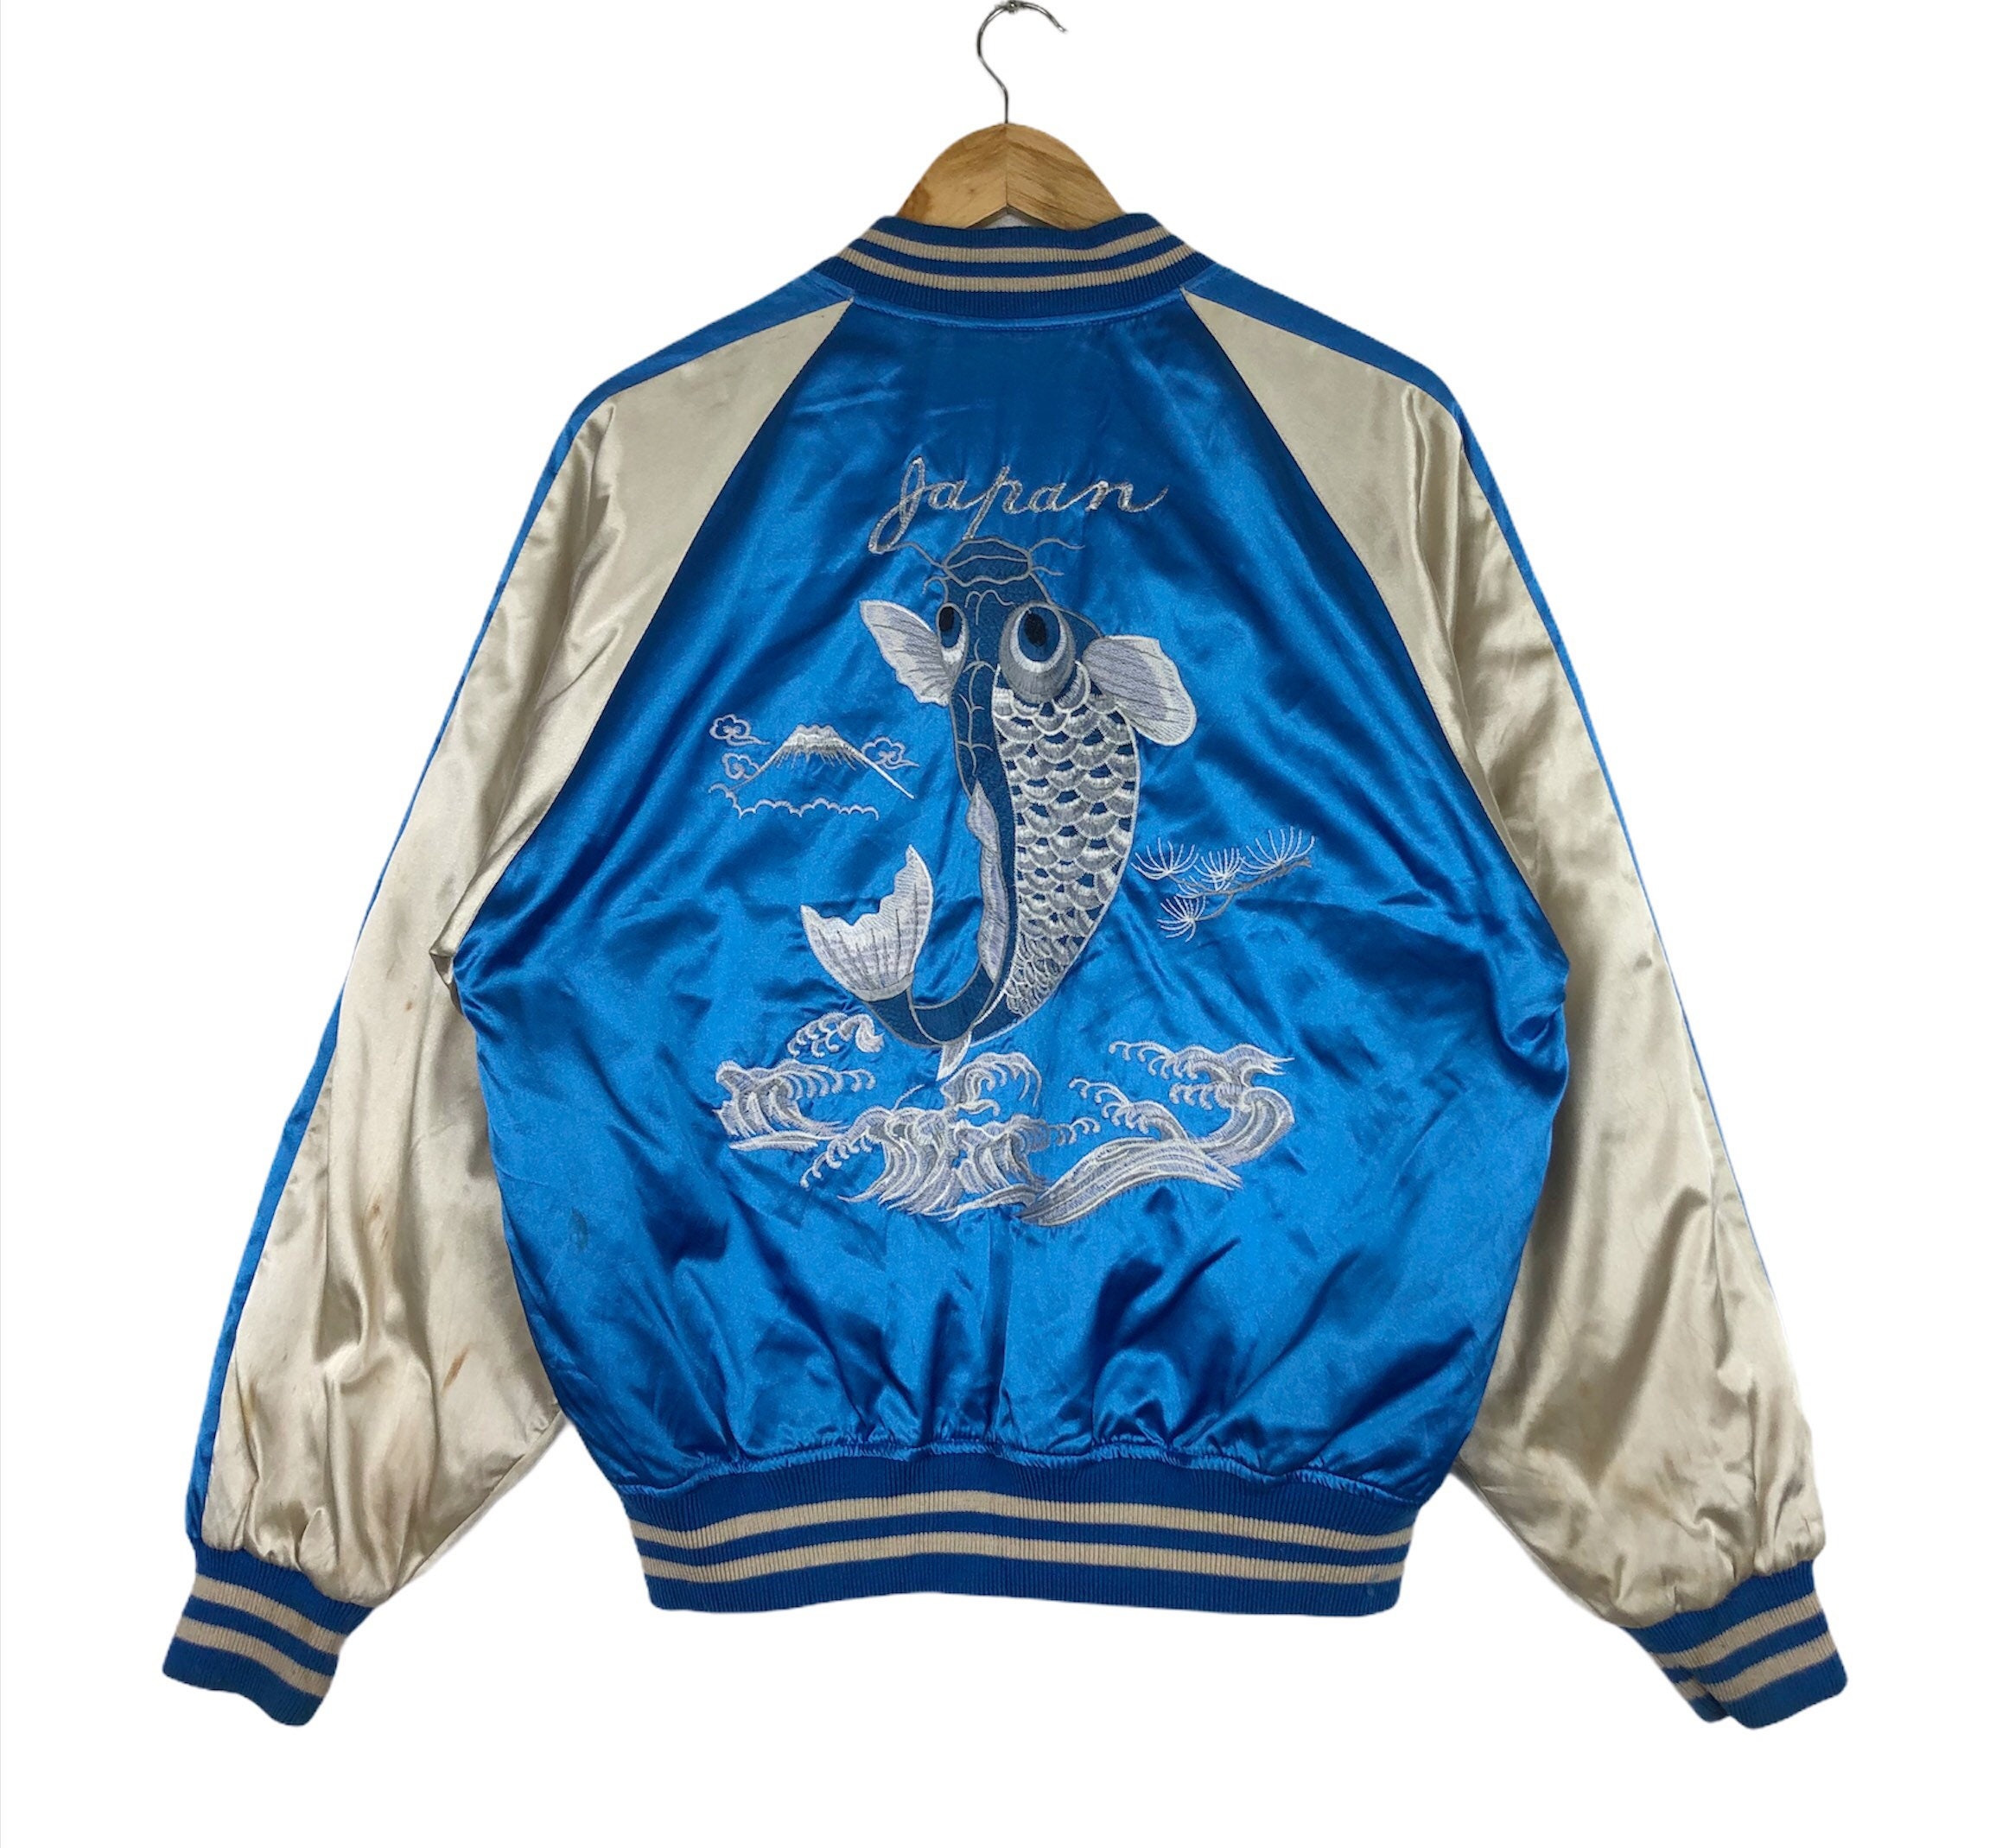 SUKAJAN Hoshihime Koi Fish Jacket Japanese Souvenir Fighter Embroidery Japan Brand